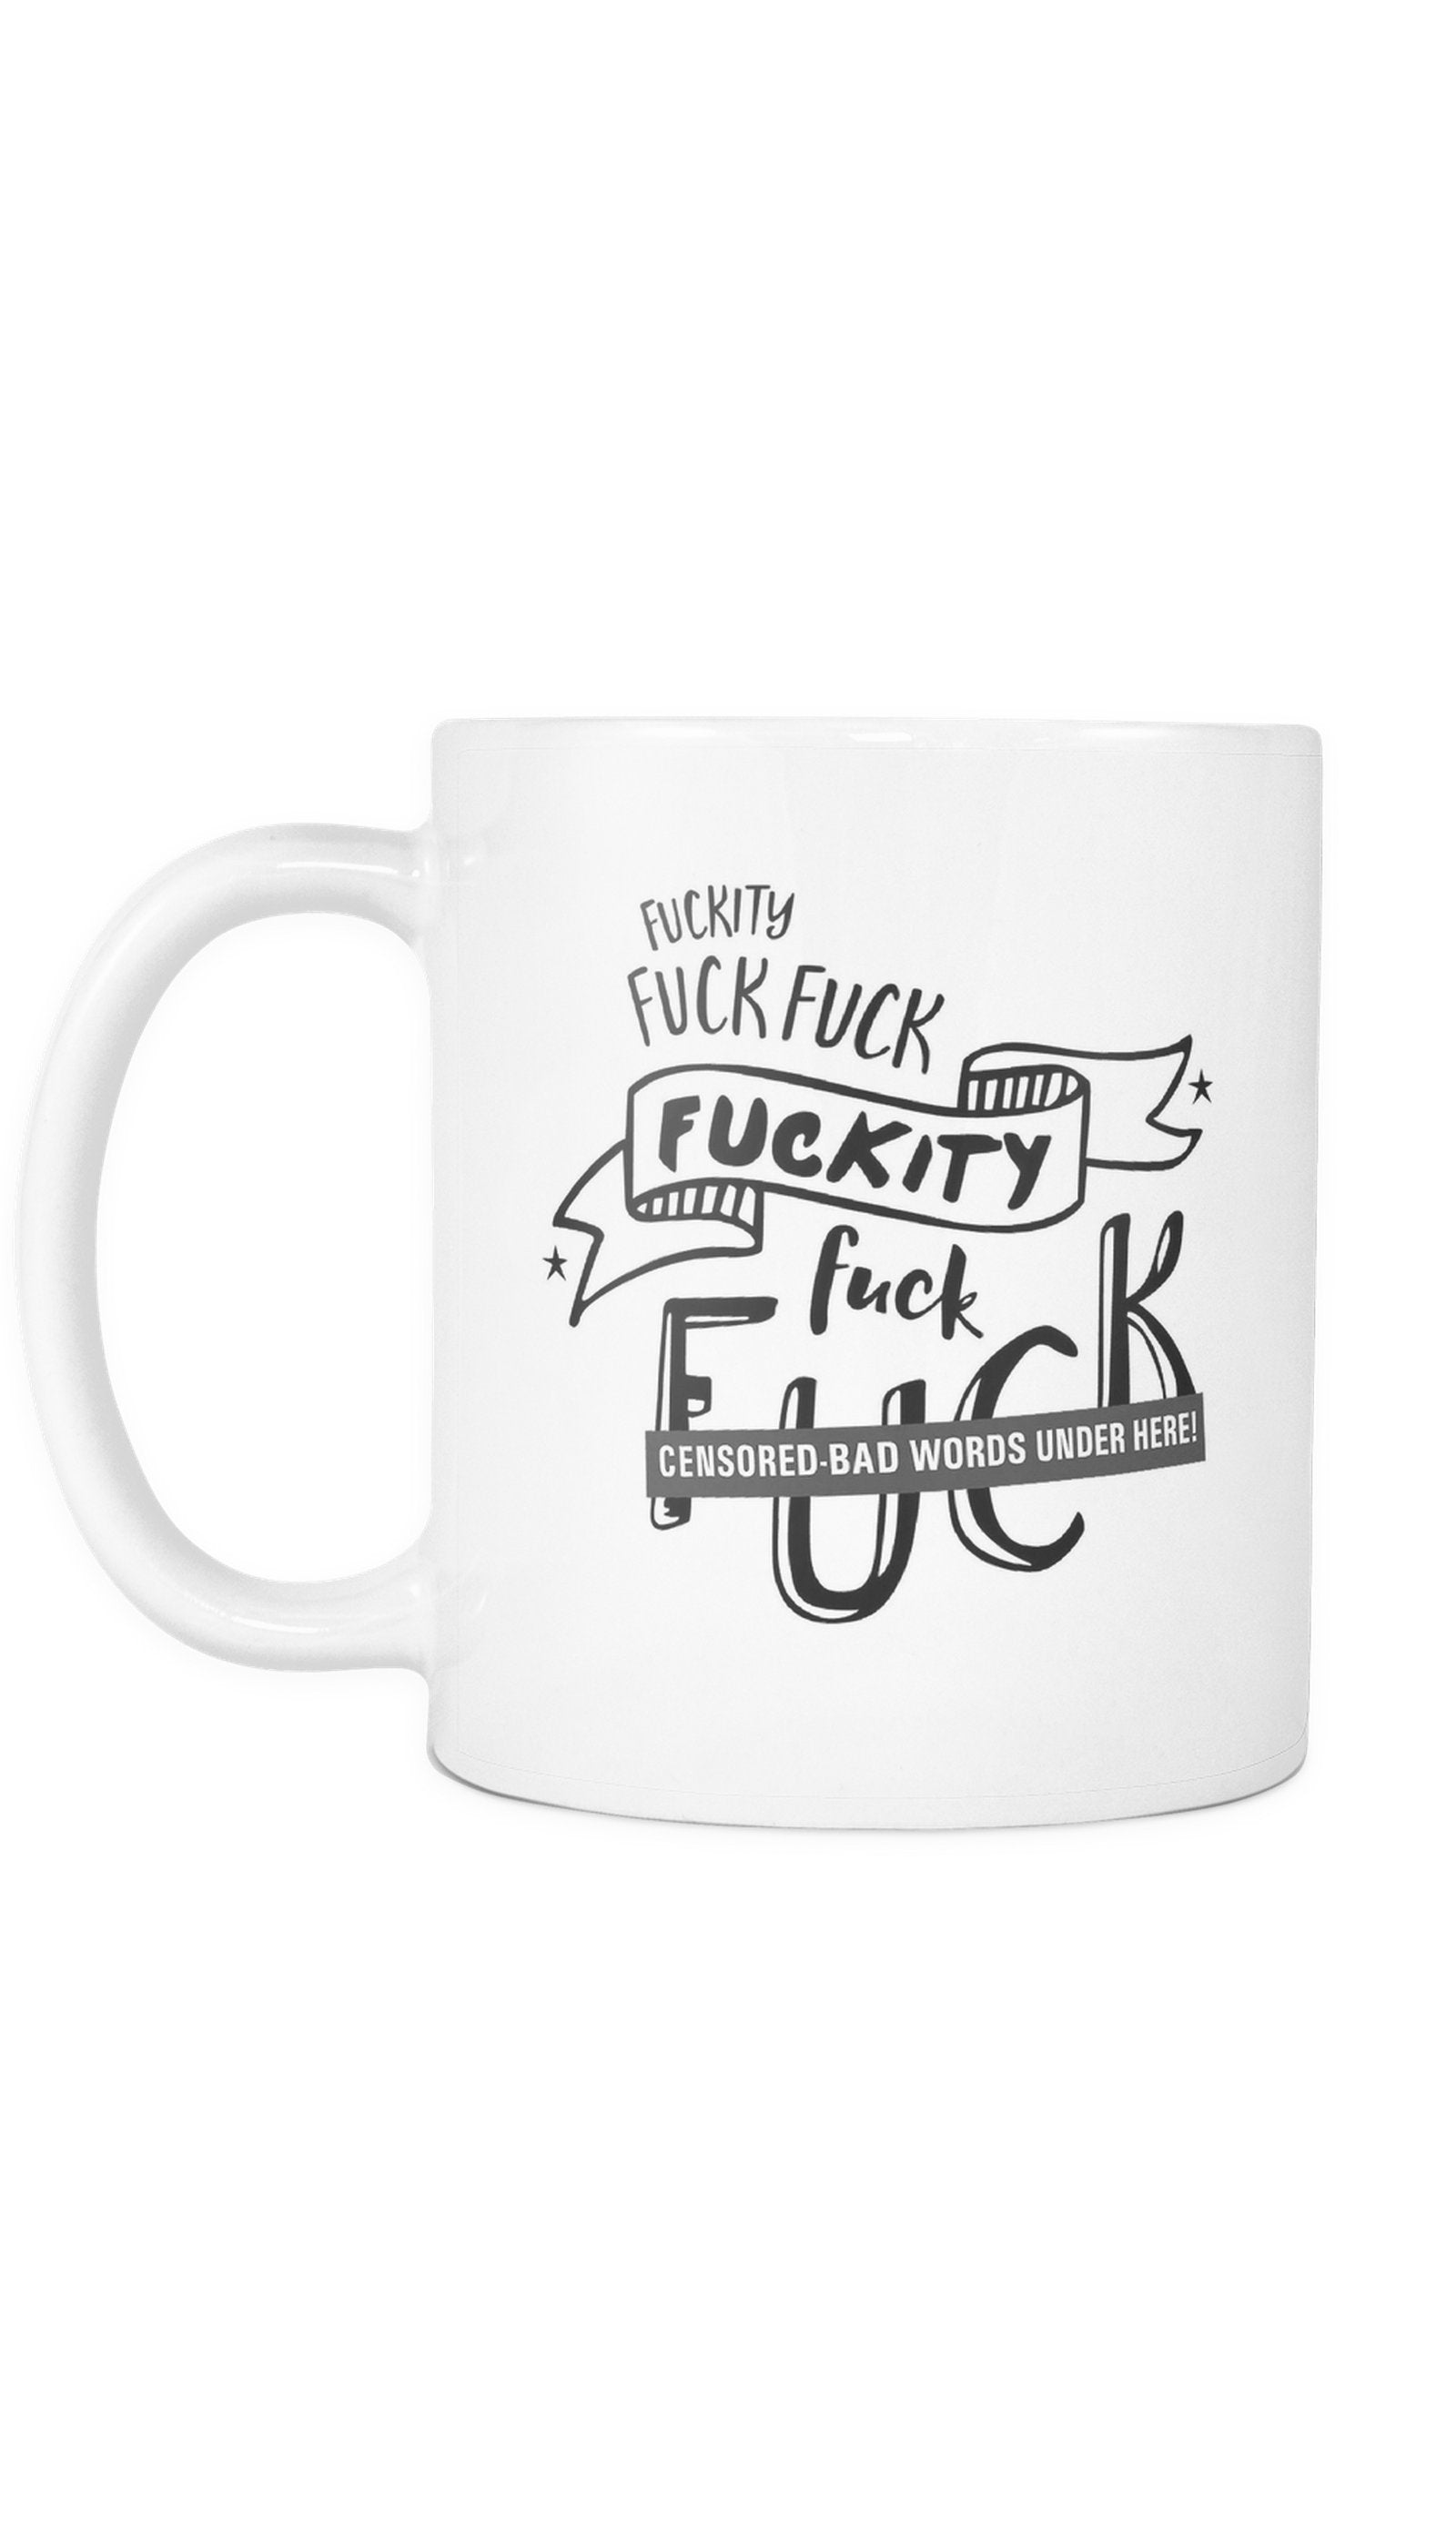 Fuckity Fuck Fuuck Censored Bad Words Mug | Sarcastic Me